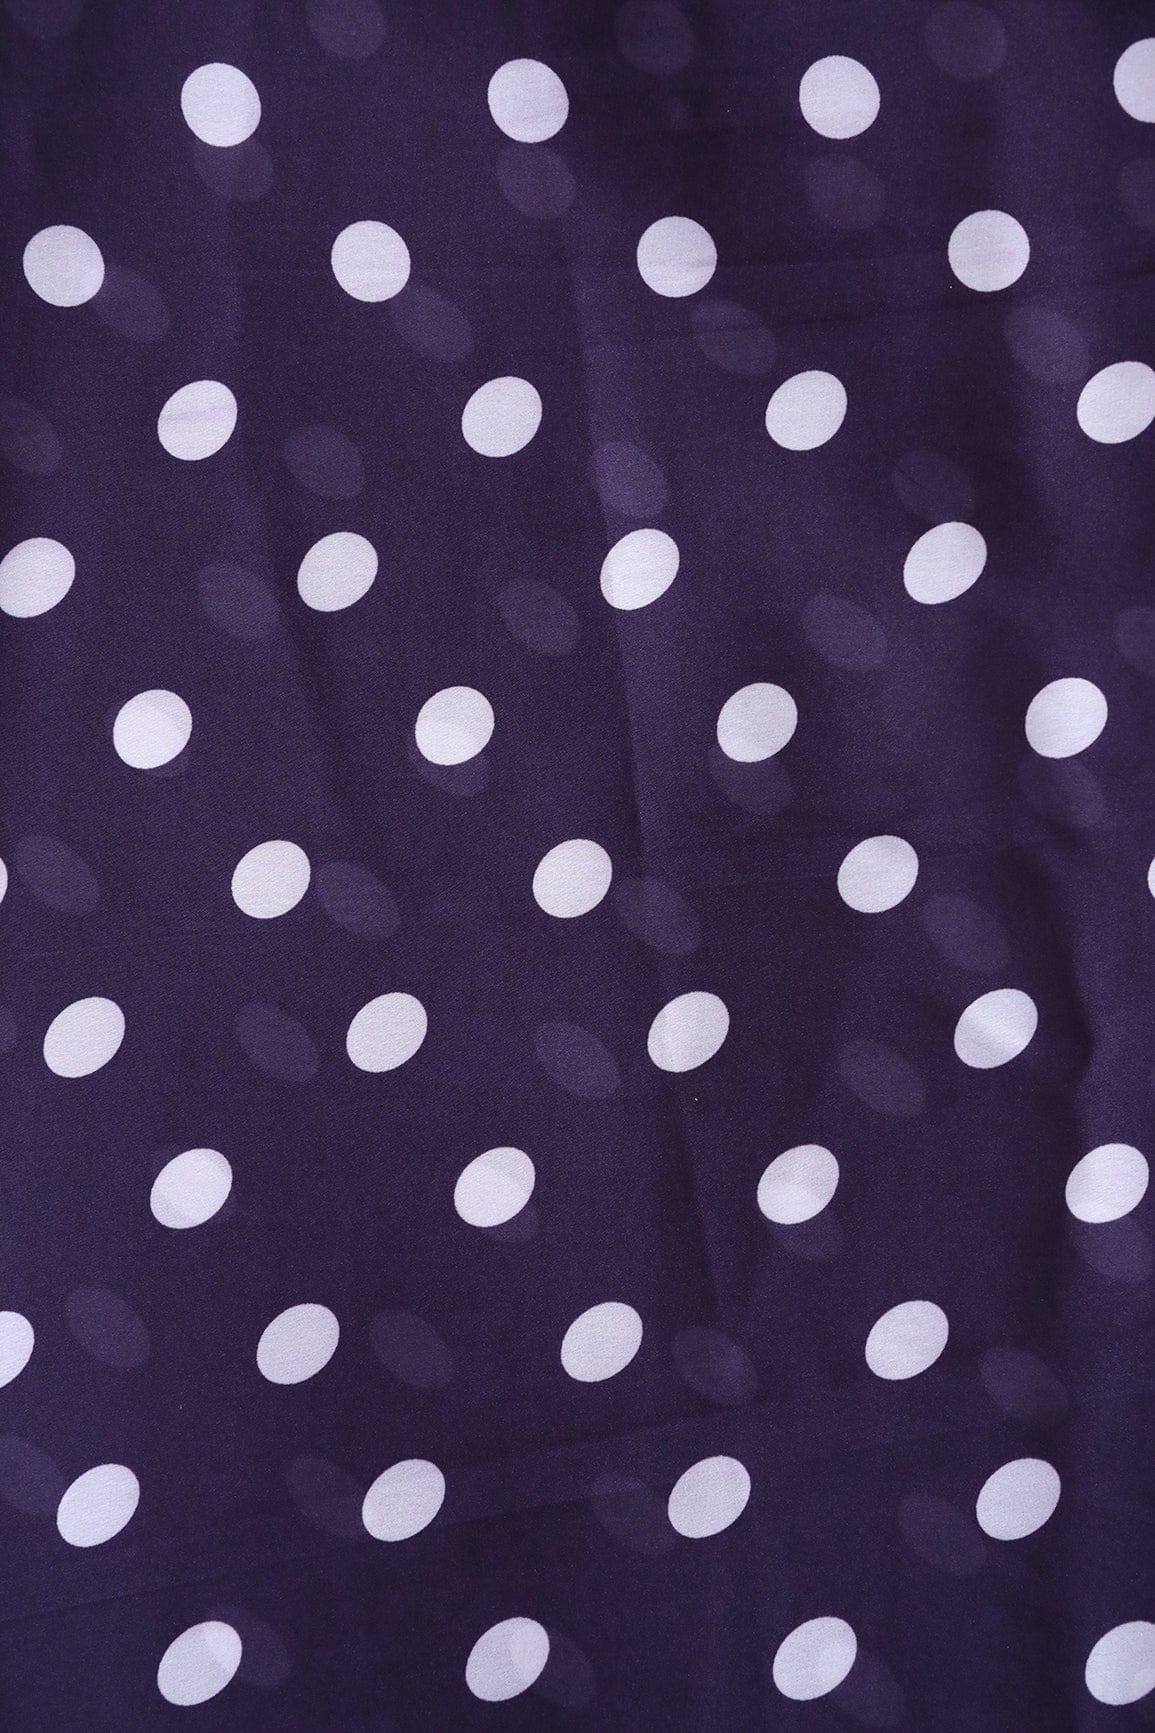 doeraa Prints Plum Purple And White Polka Dots Pattern Digital Print On Georgette Satin Fabric